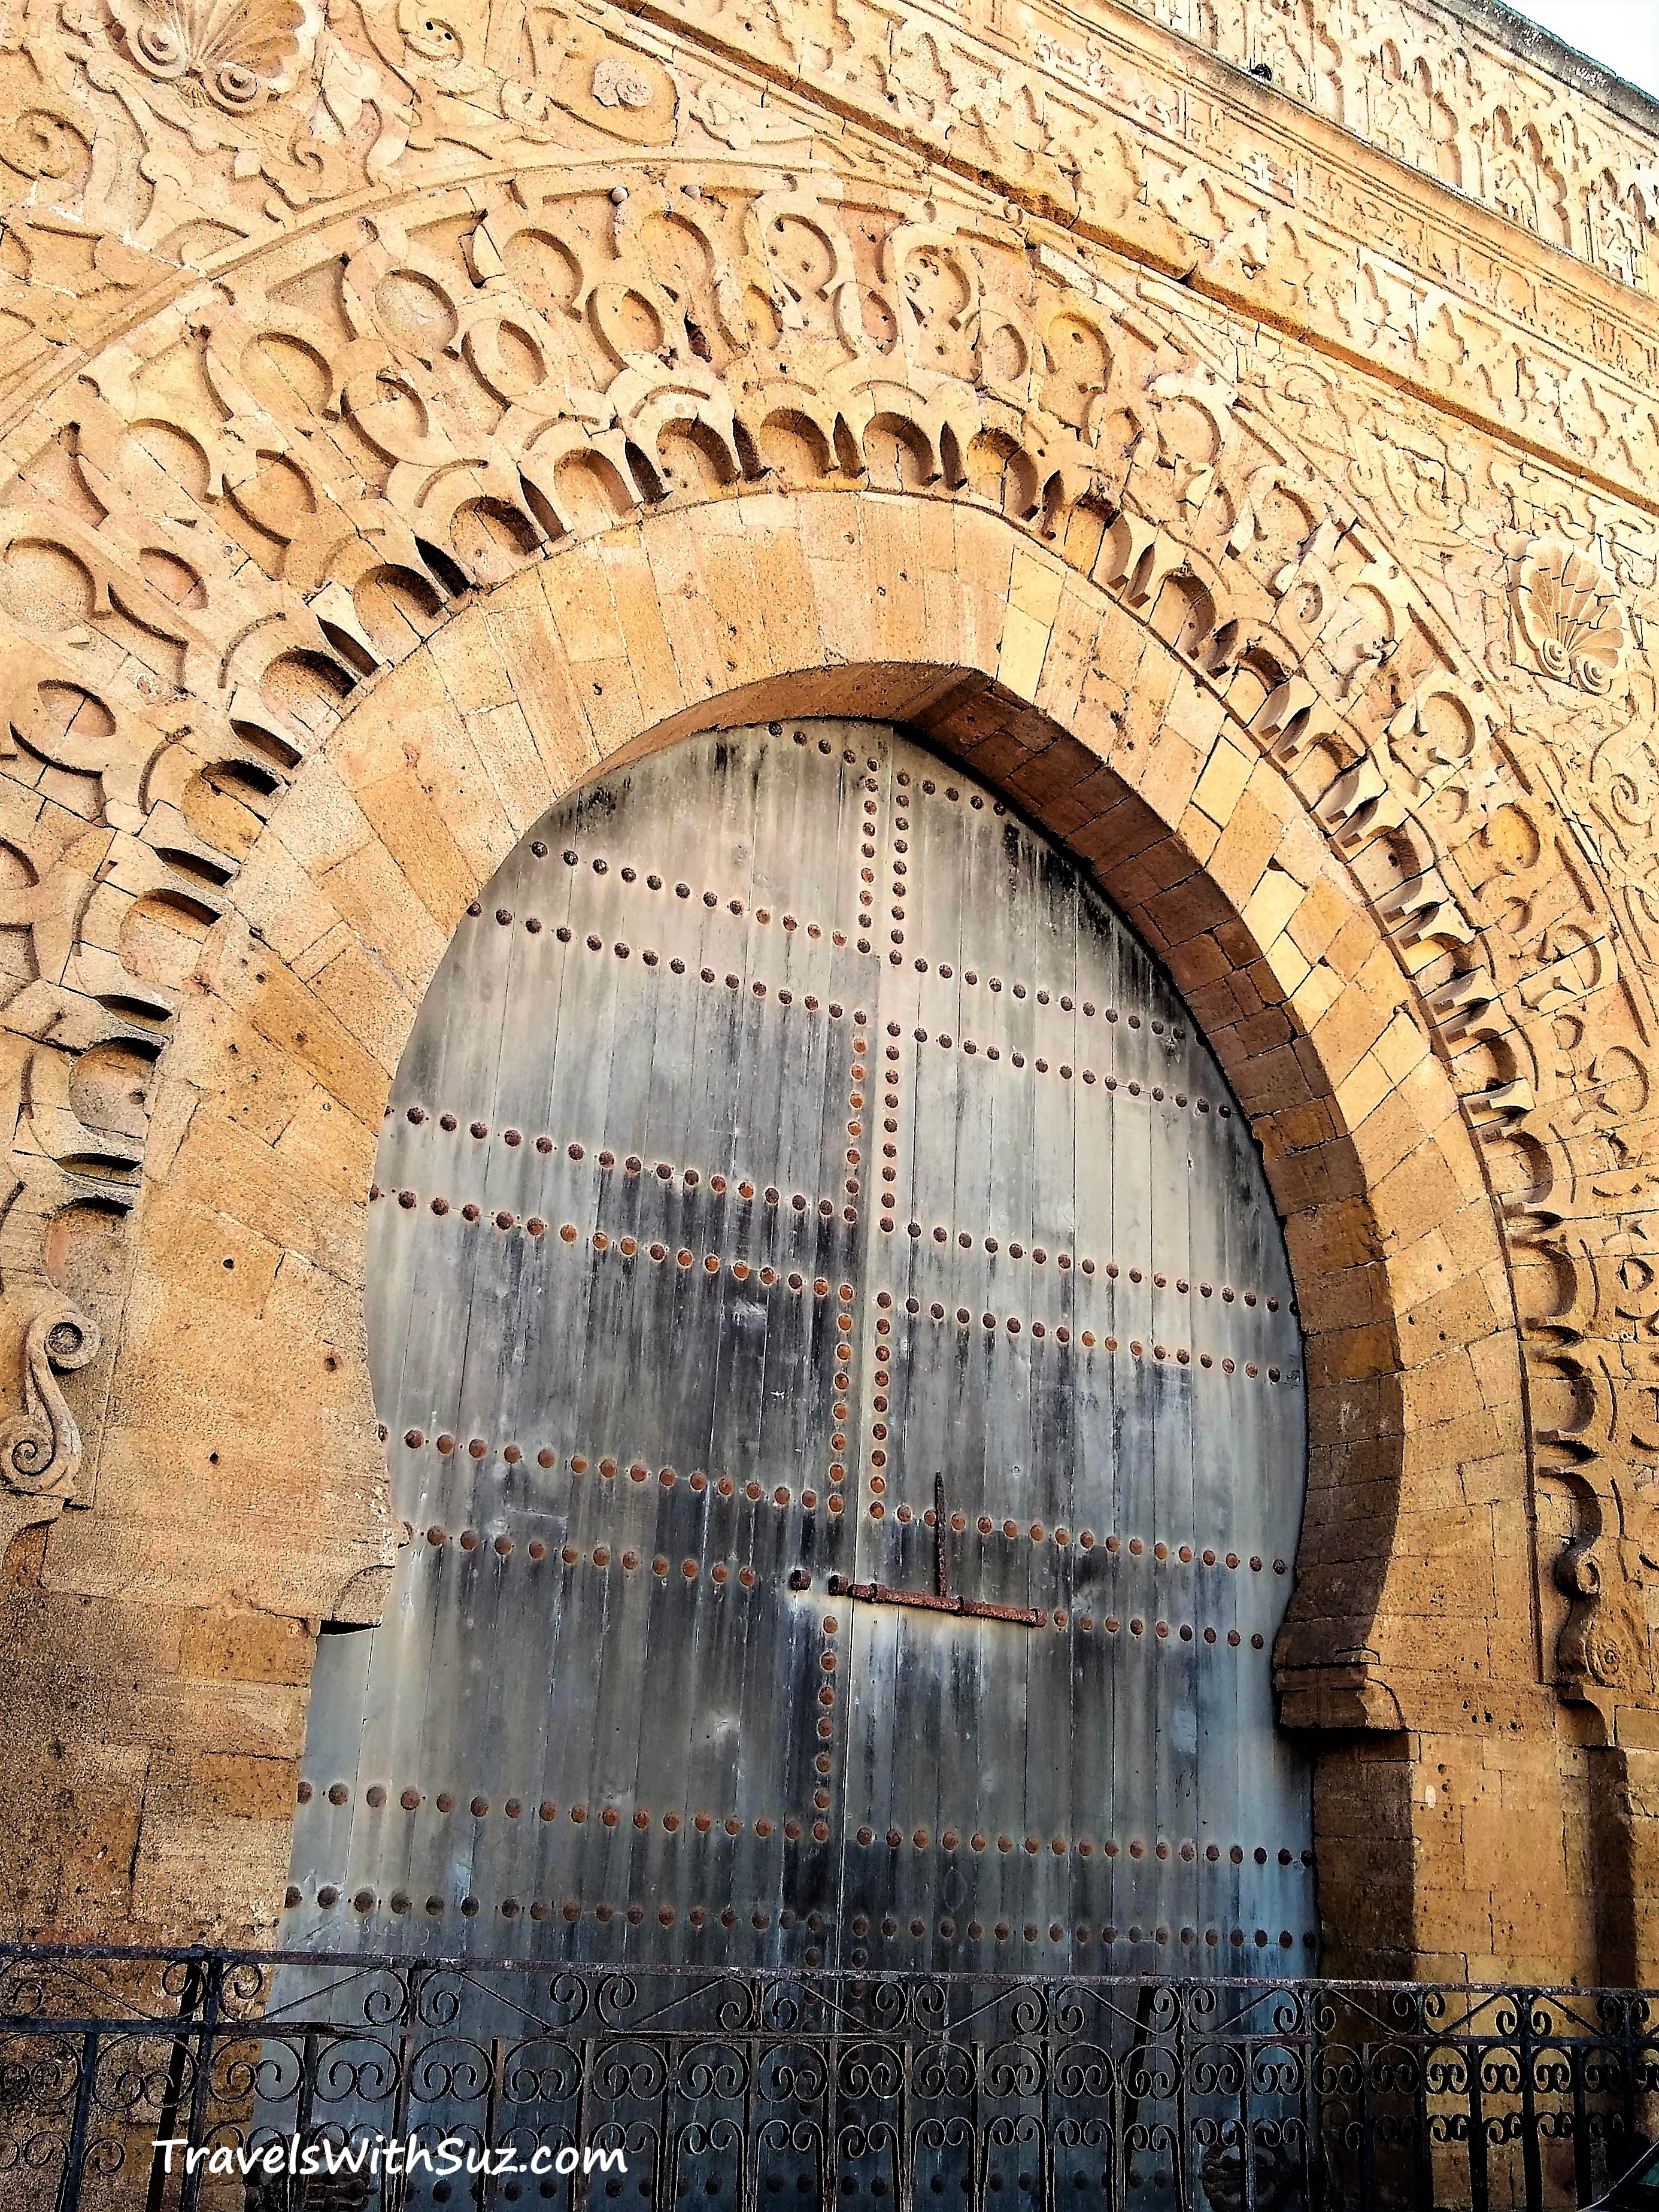 large, arched doorway in Rabat, Morocco's kasbah